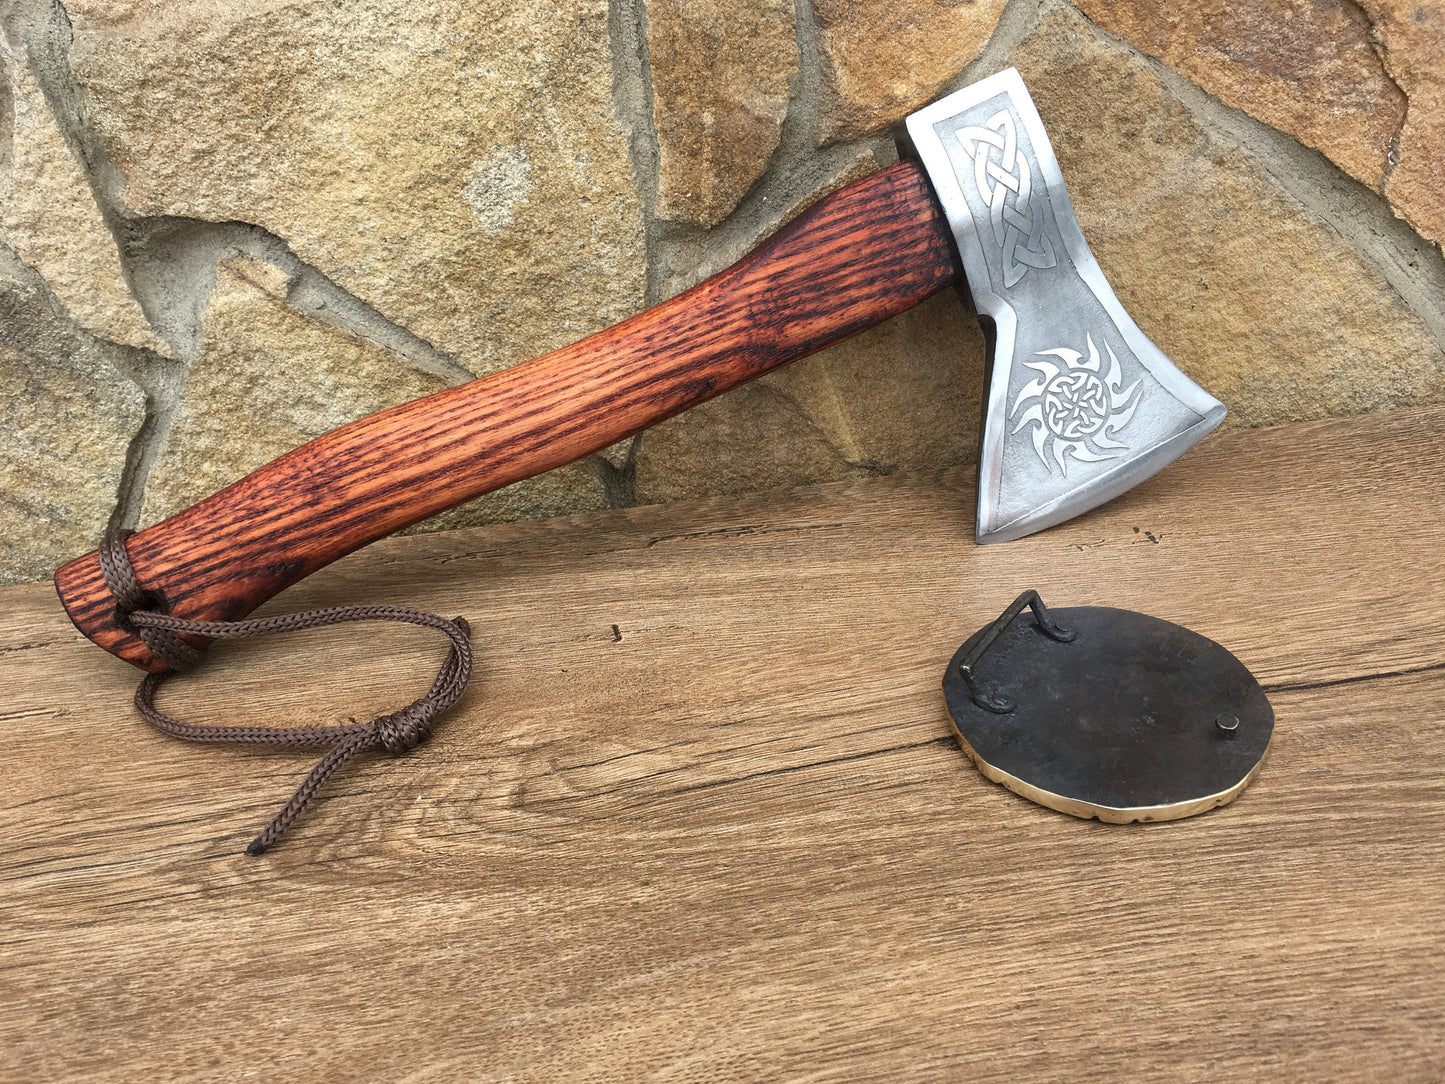 Mens gift set, viking axe, buckle, mens gifts, belt buckle, mens gift ideas, medieval axe, hatchet, viking gifts, handyman tool, axes, axe